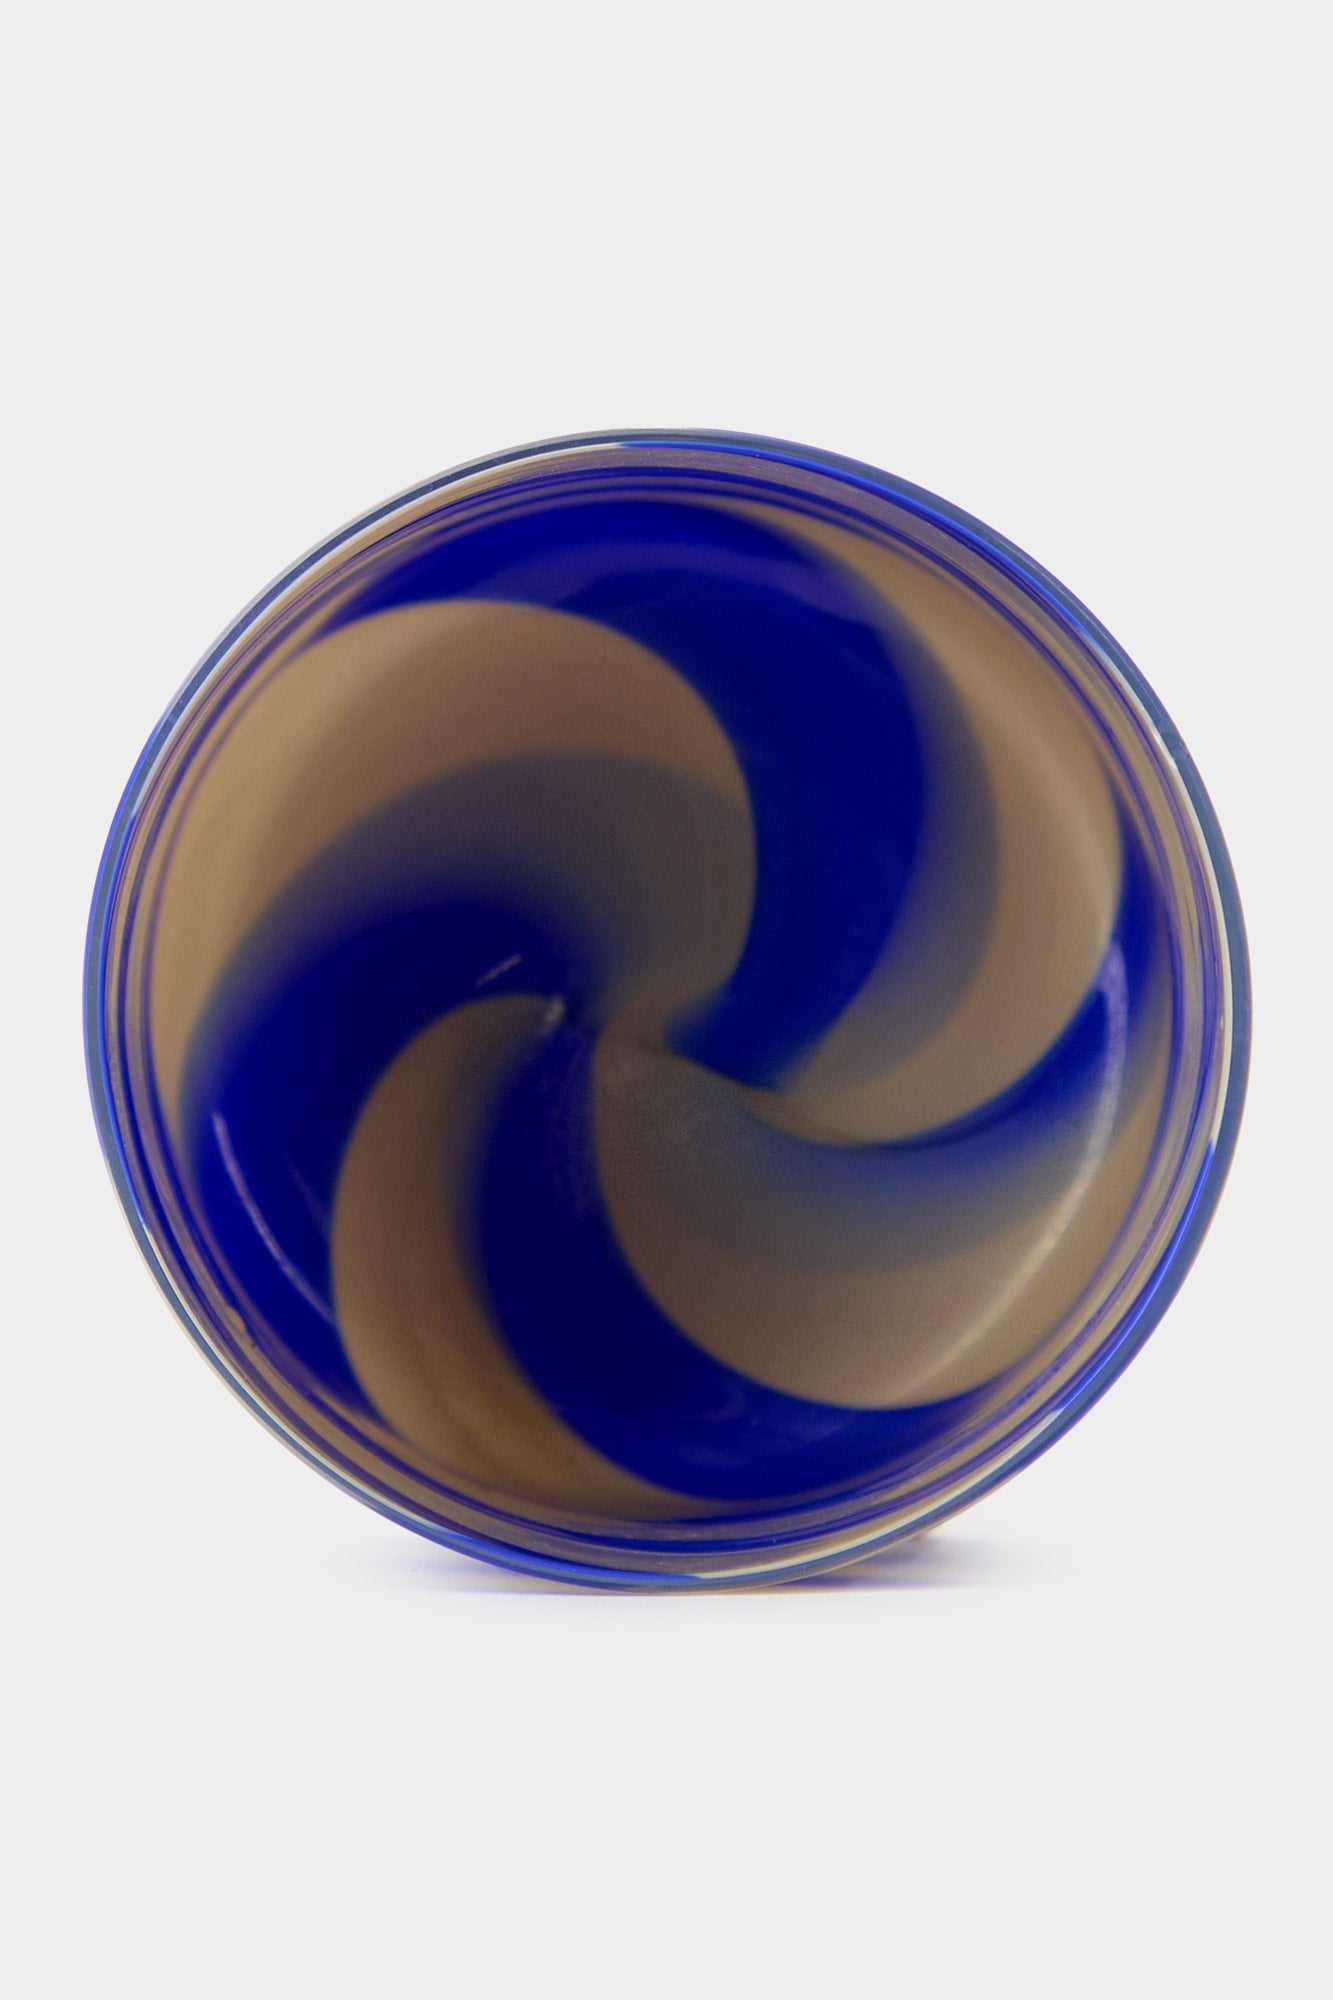 MURANO GLASS / blue & grey spiral